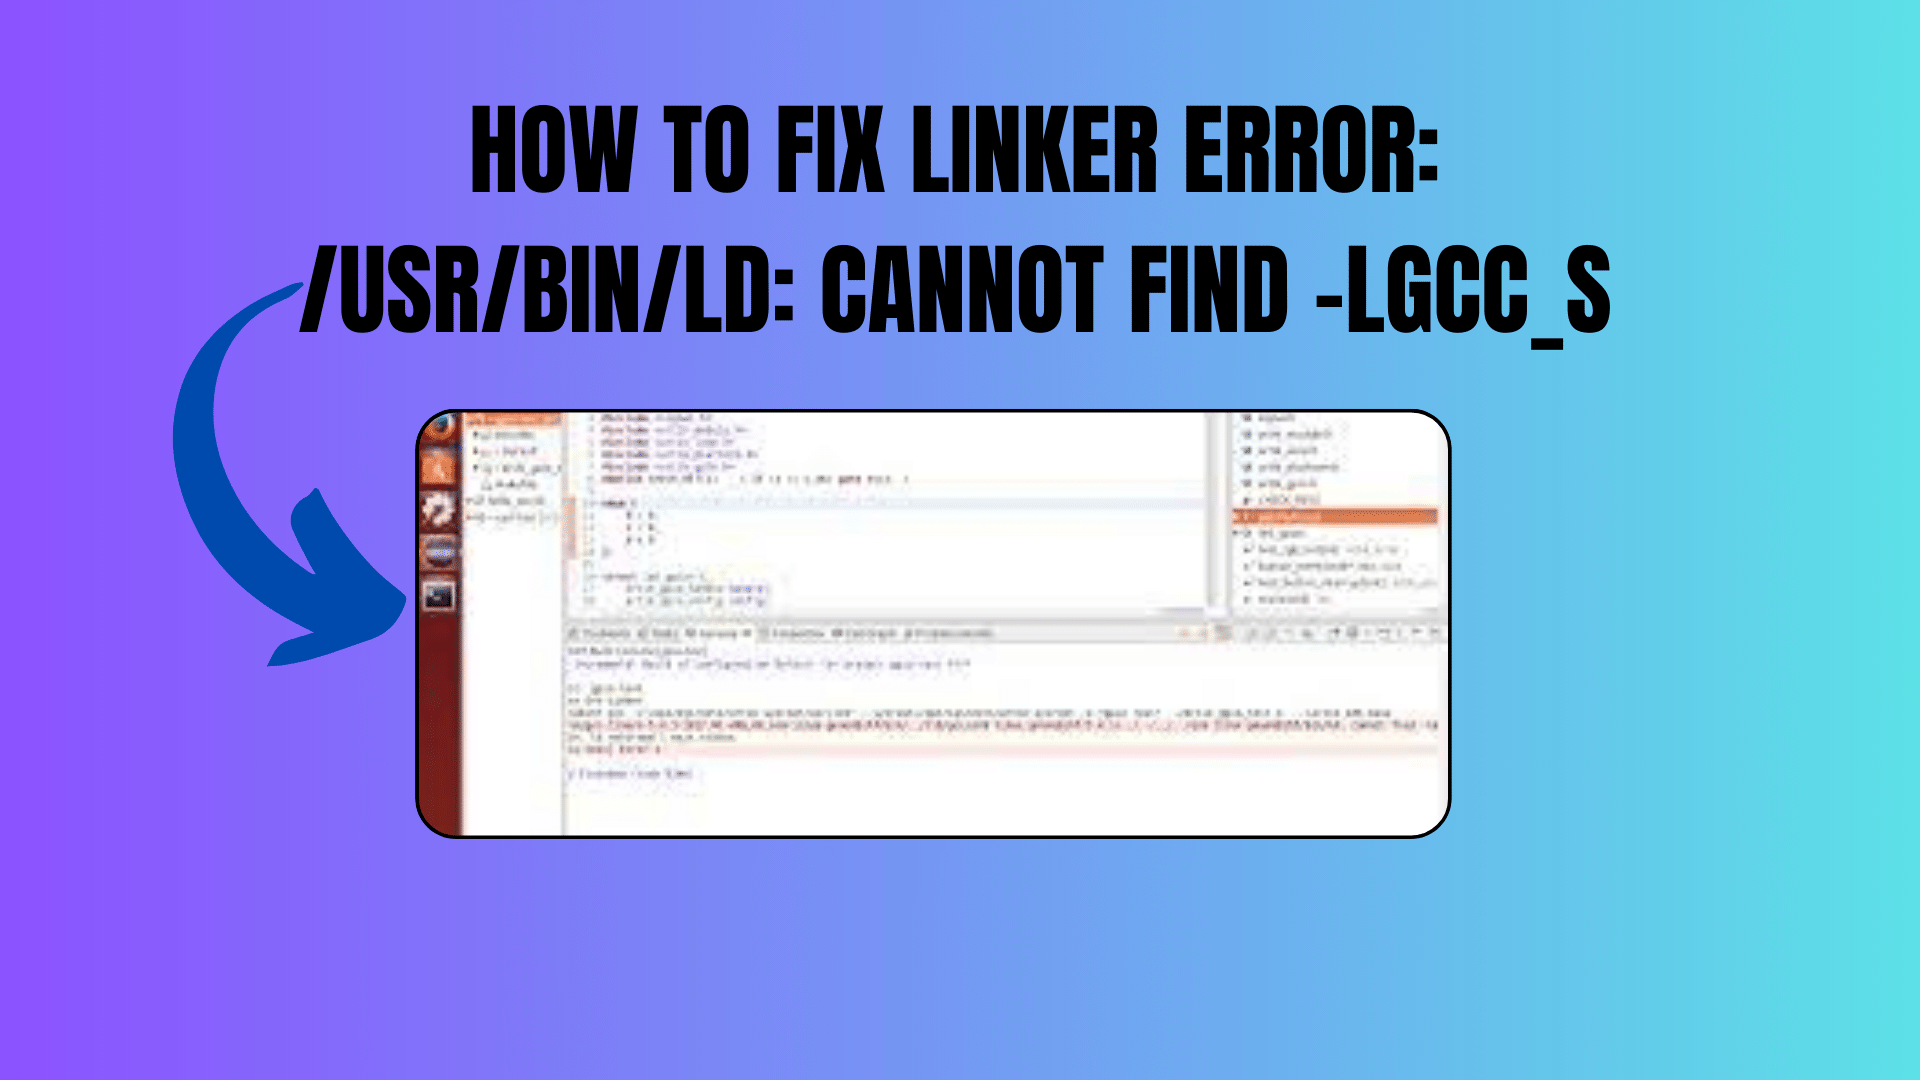 How to Fix Linker Error: /usr/bin/ld: cannot find -lgcc_s